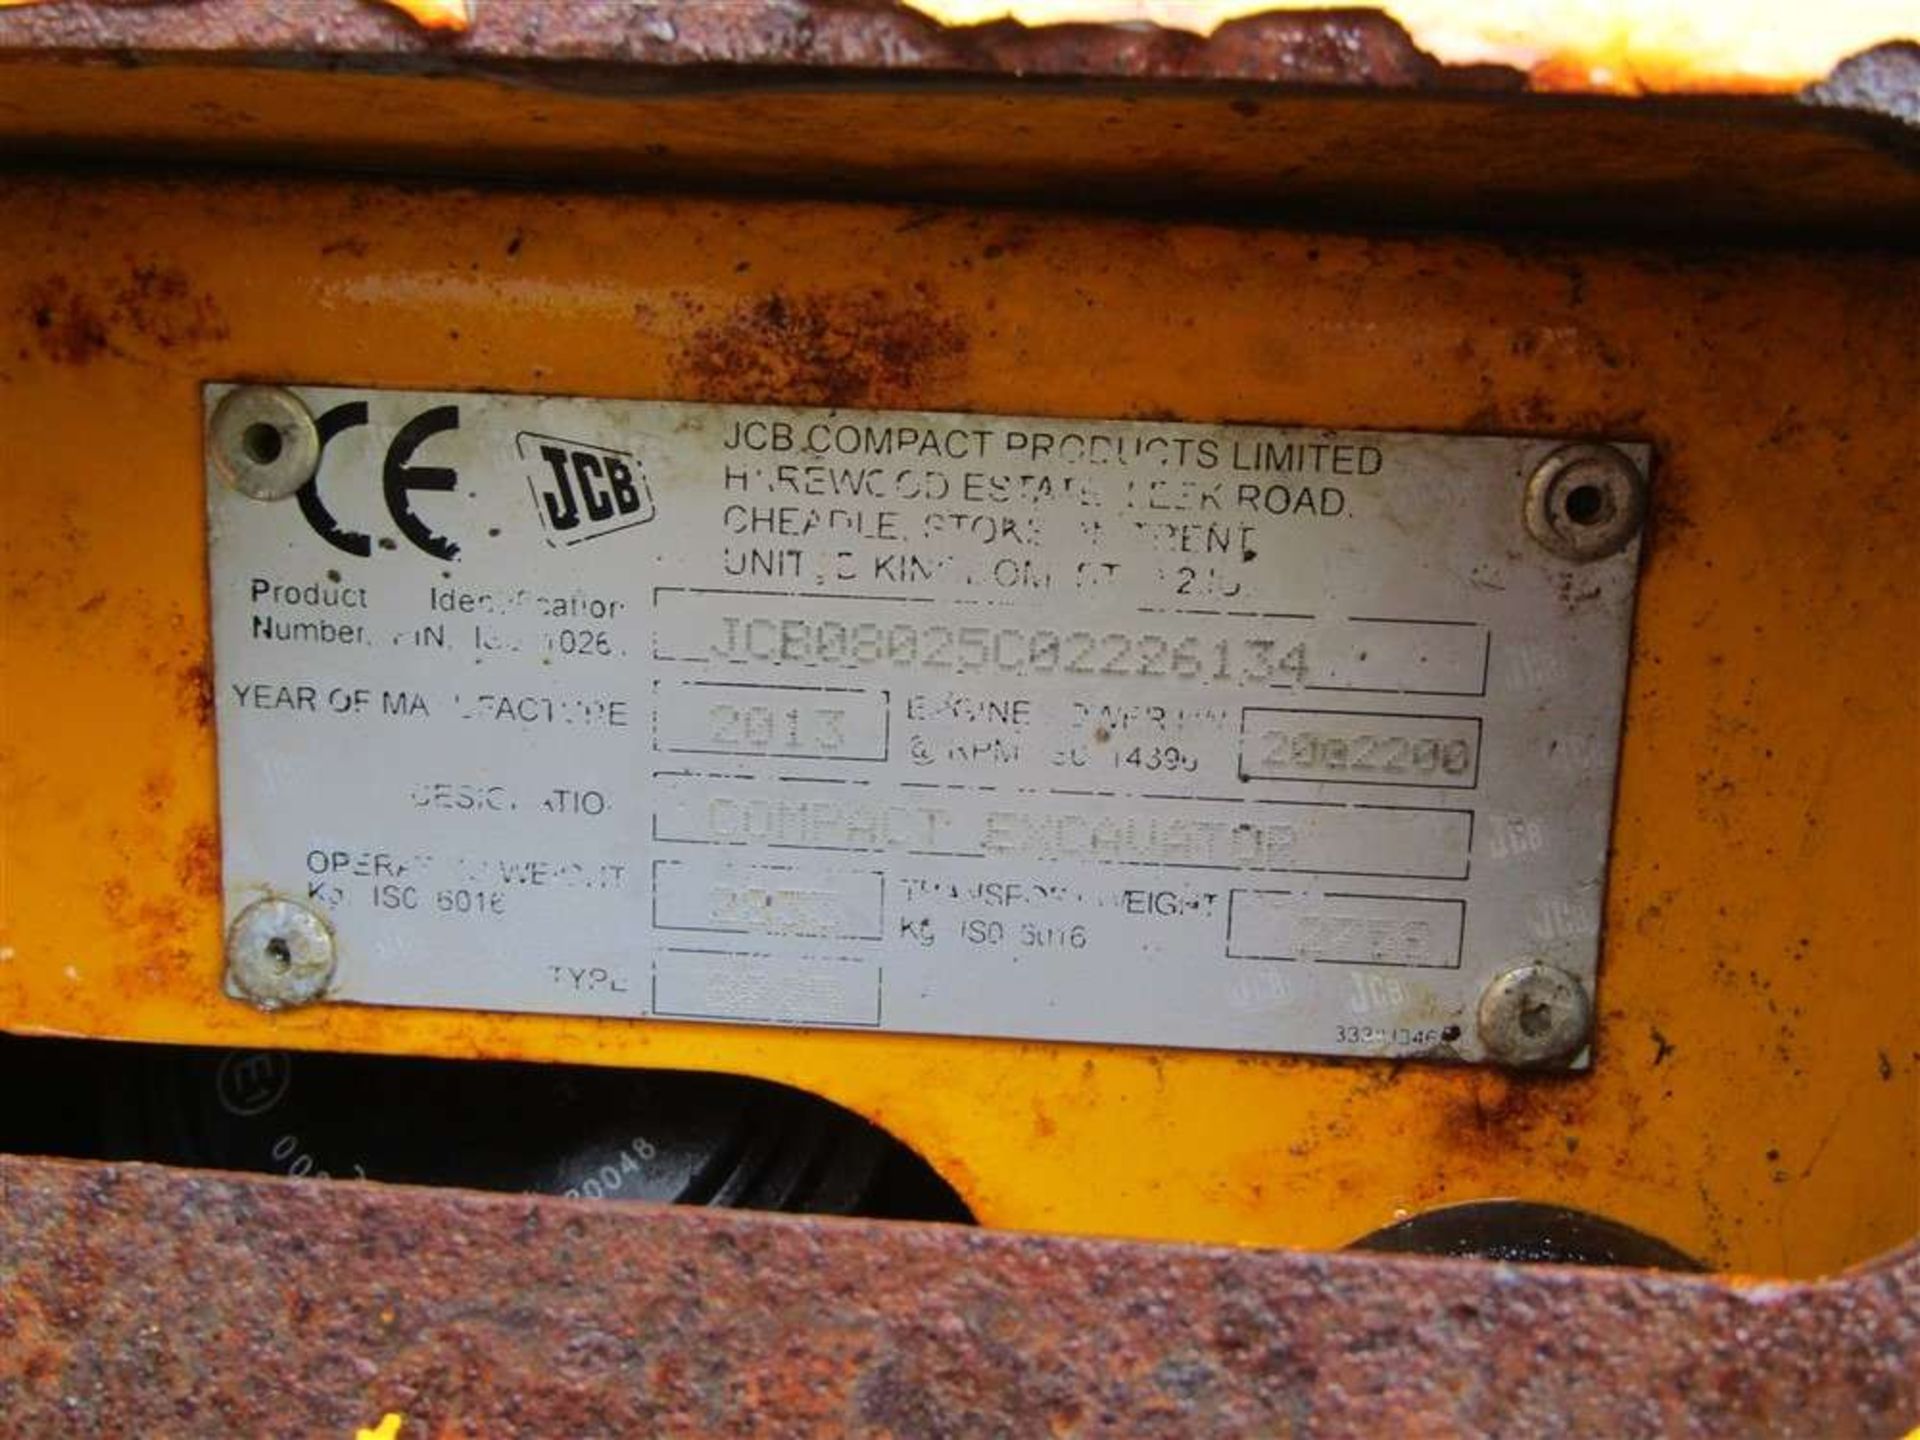 2013 JCB 8025 3 tonne Compact Excavator - Image 7 of 7